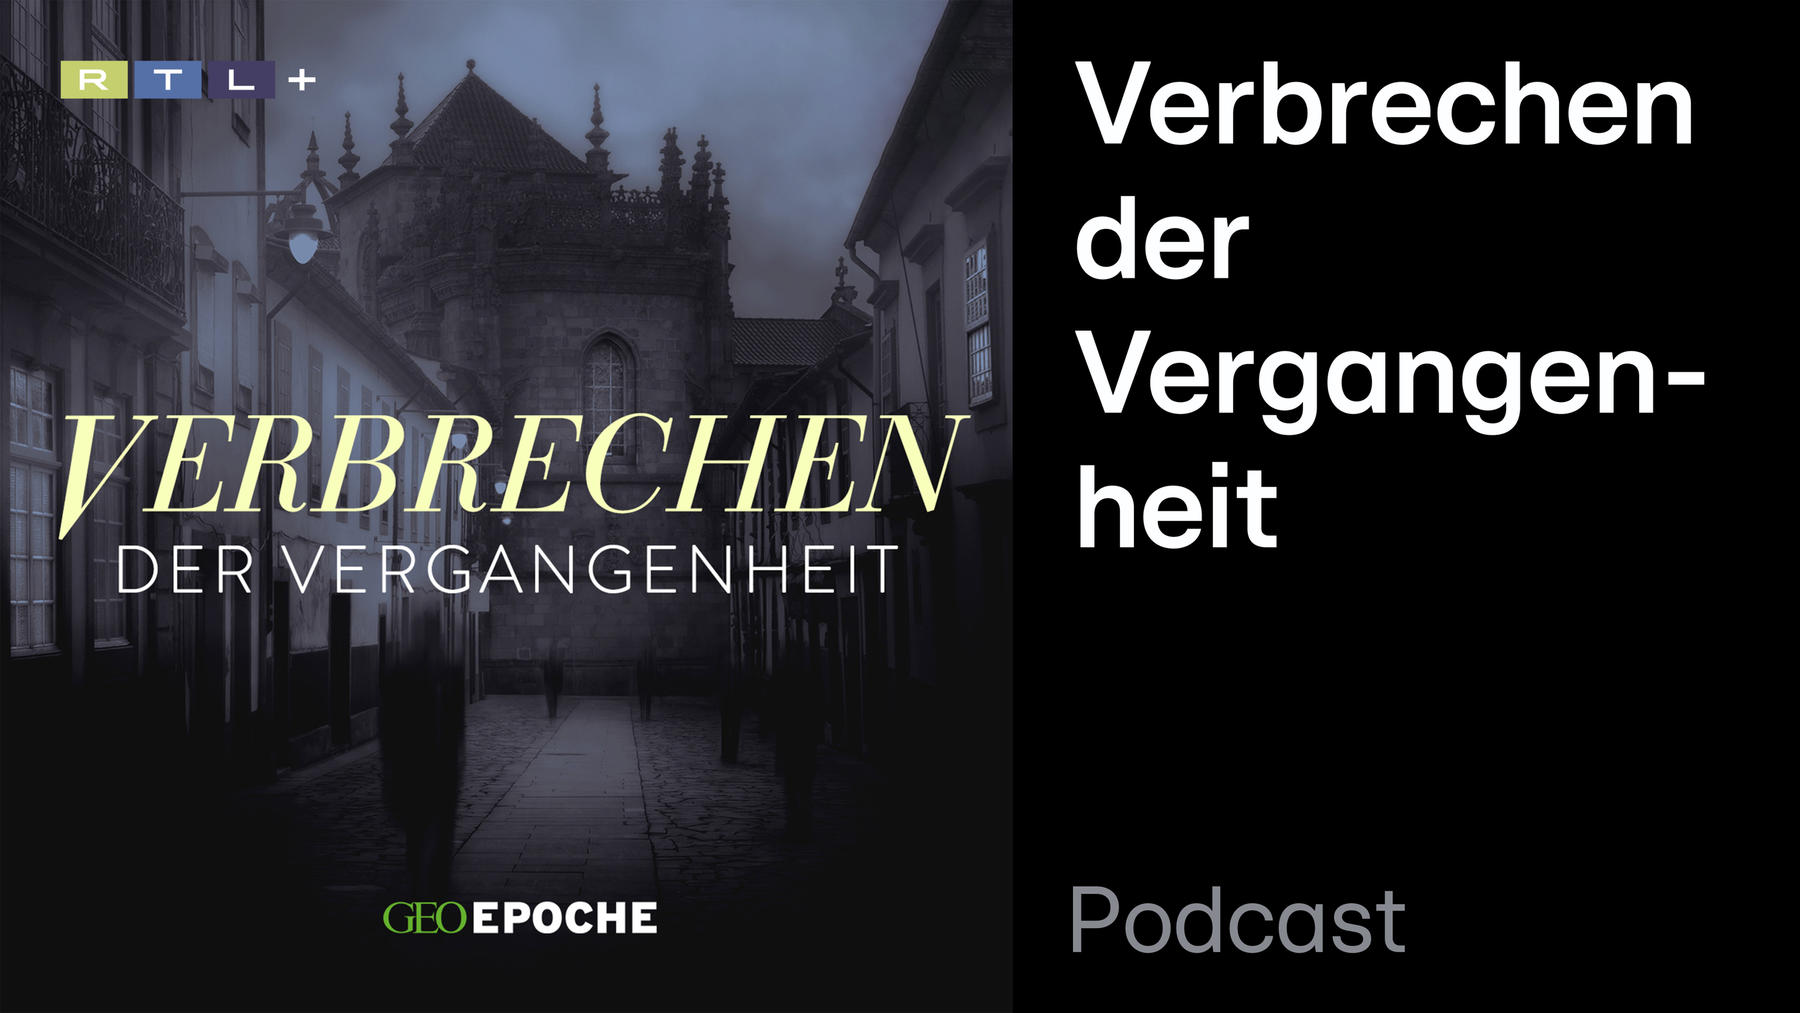 Podcast: Verbrechen der Vergangenheit